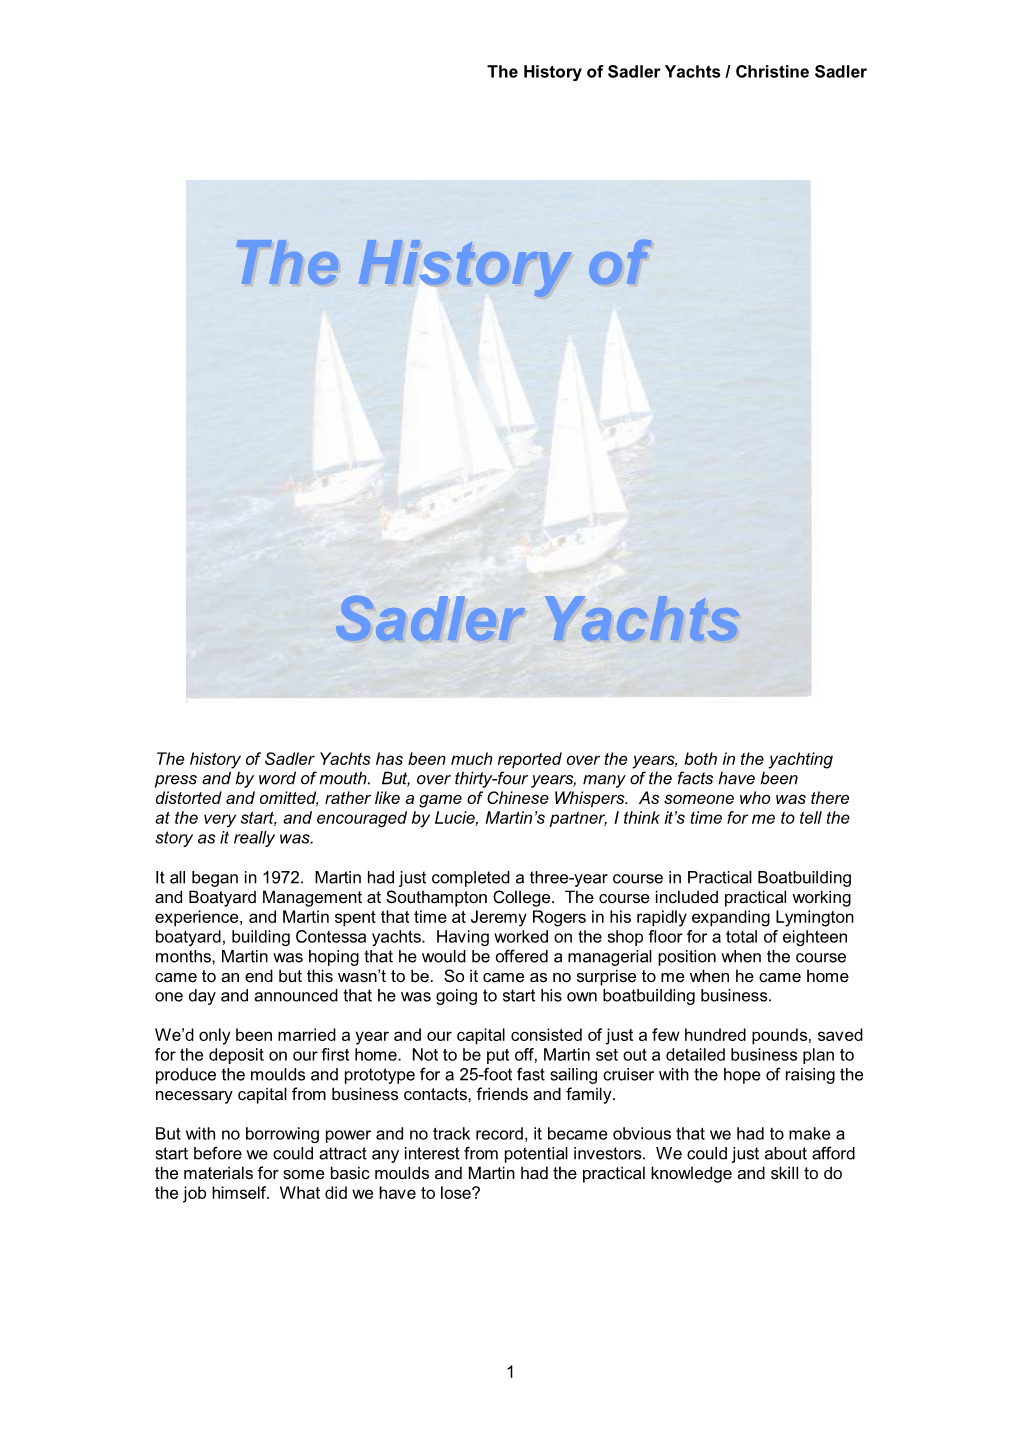 History of Sadler Yachts / Christine Sadler